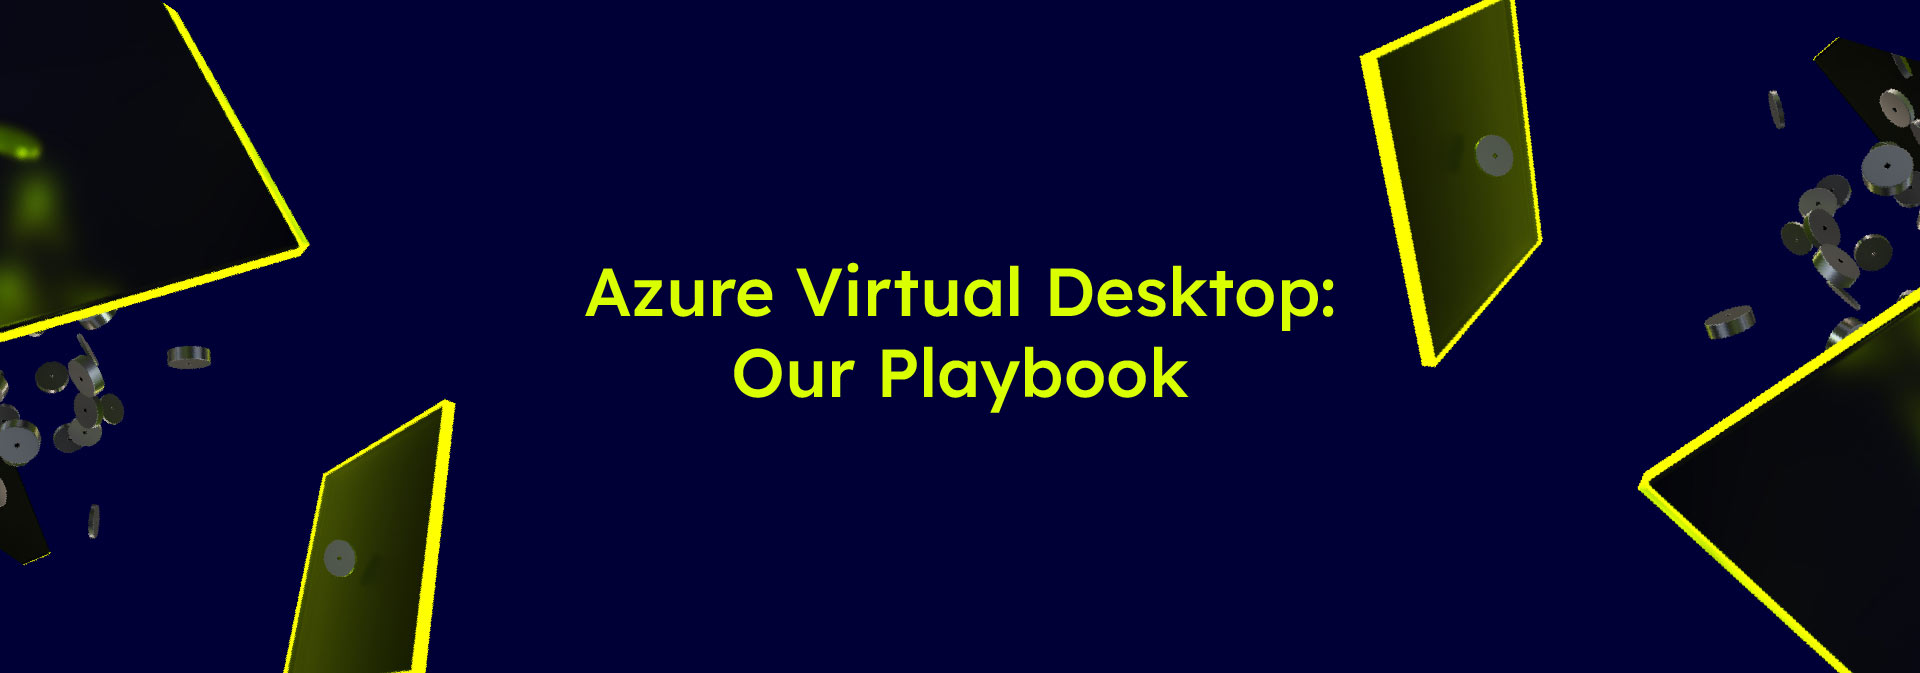 Azure Virtual Desktop – Our Playbook